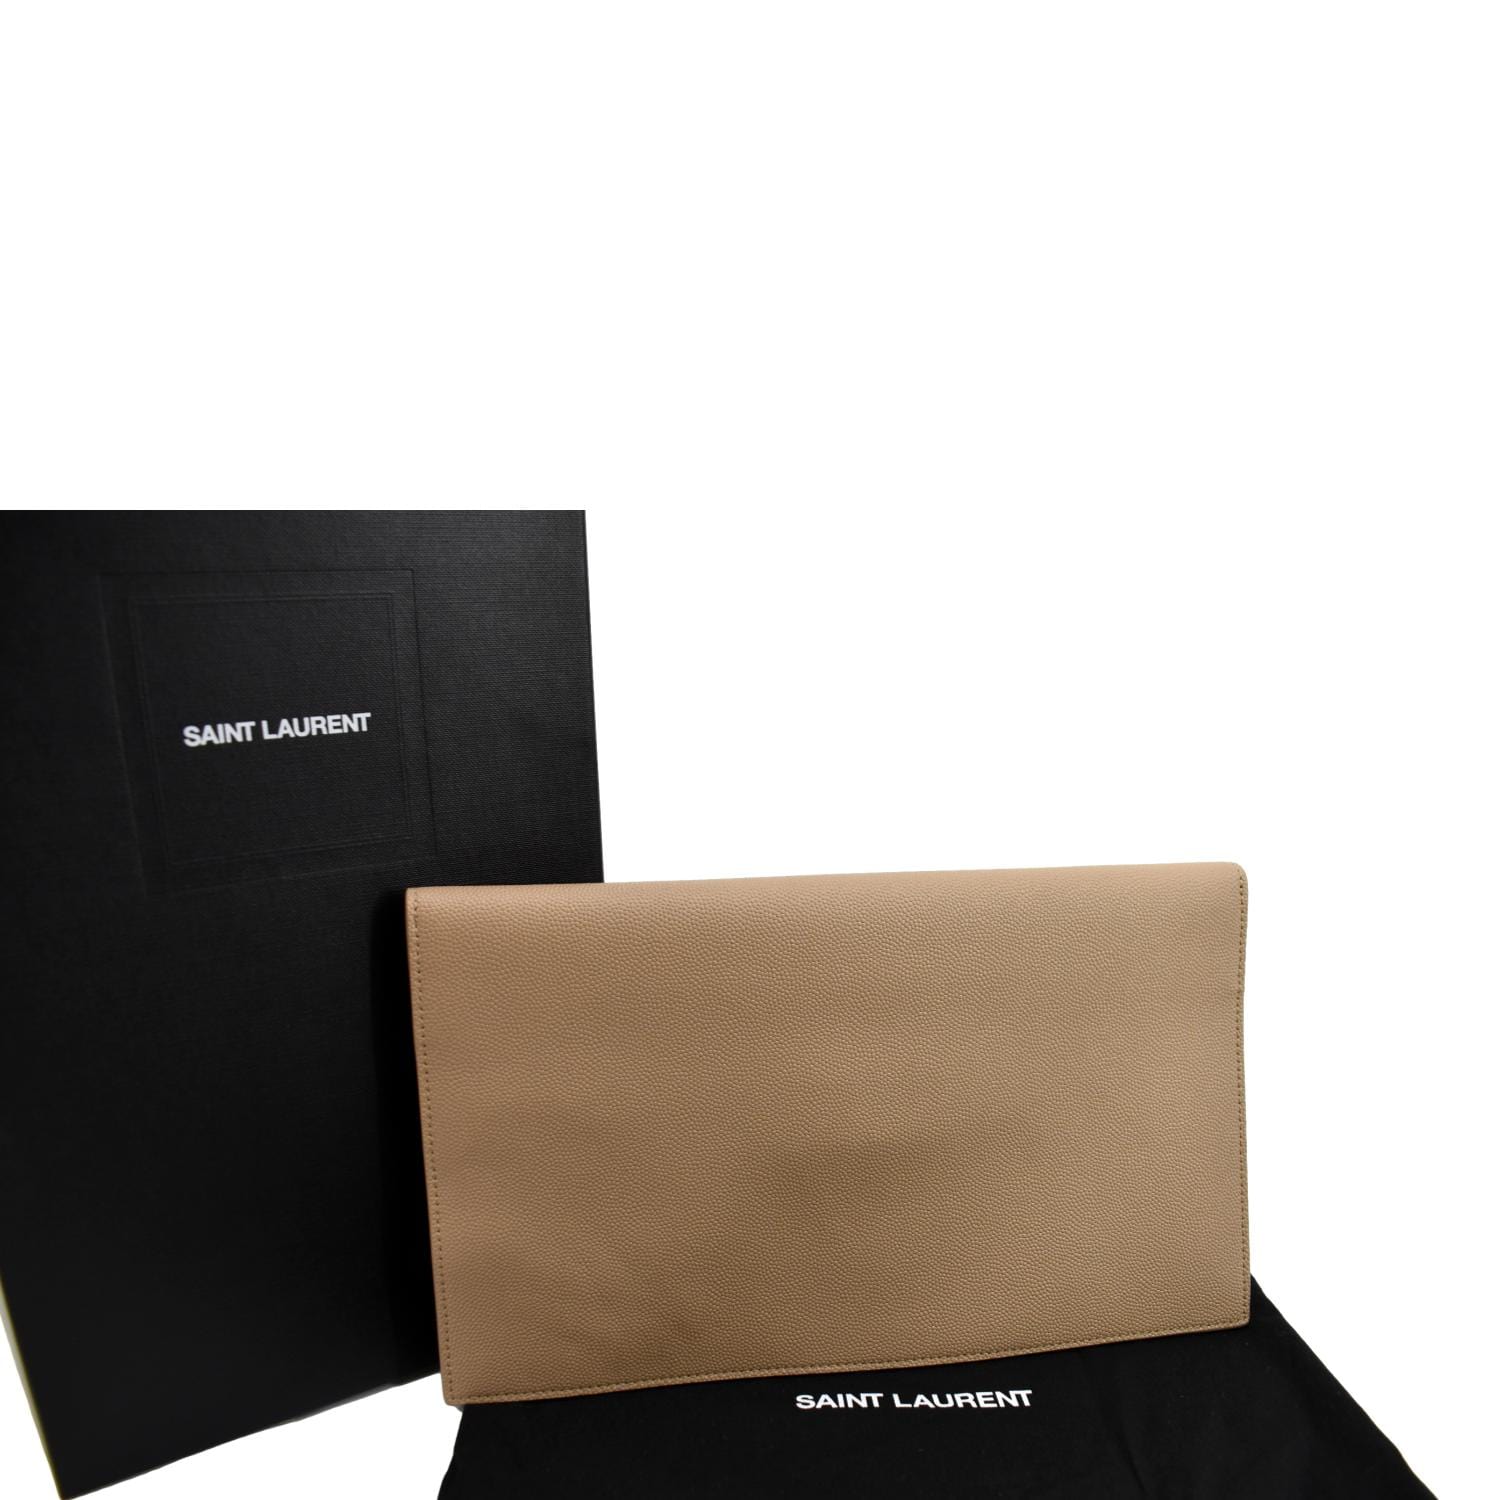 SAINT LAURENT Monogram Envelope Clutch Bag